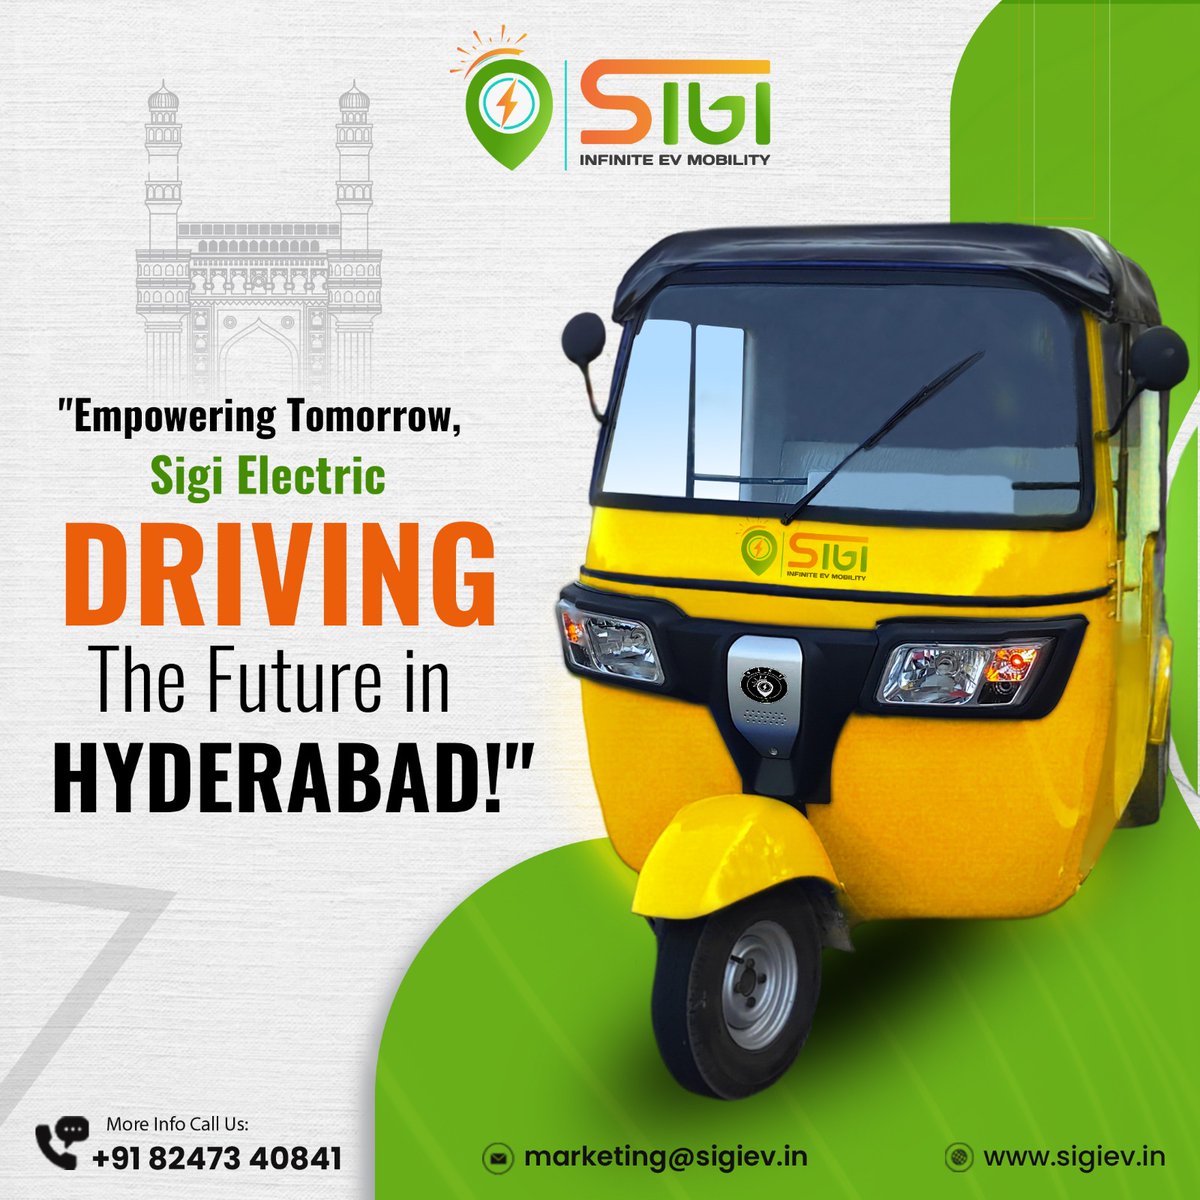 #FutureOfMobility #CleanCityDrive #SustainableJourneys #EmpowerTomorrow #DrivingInnovation #SustainableCityDriving #SmartCityTransport #EVRevolution #FutureMobility #CleanTransportHyderabad #HyderabadOnWheels #SigiInHyderabad  #SigiElectricHyderabad #SigiElectric #gosigi #SIGI